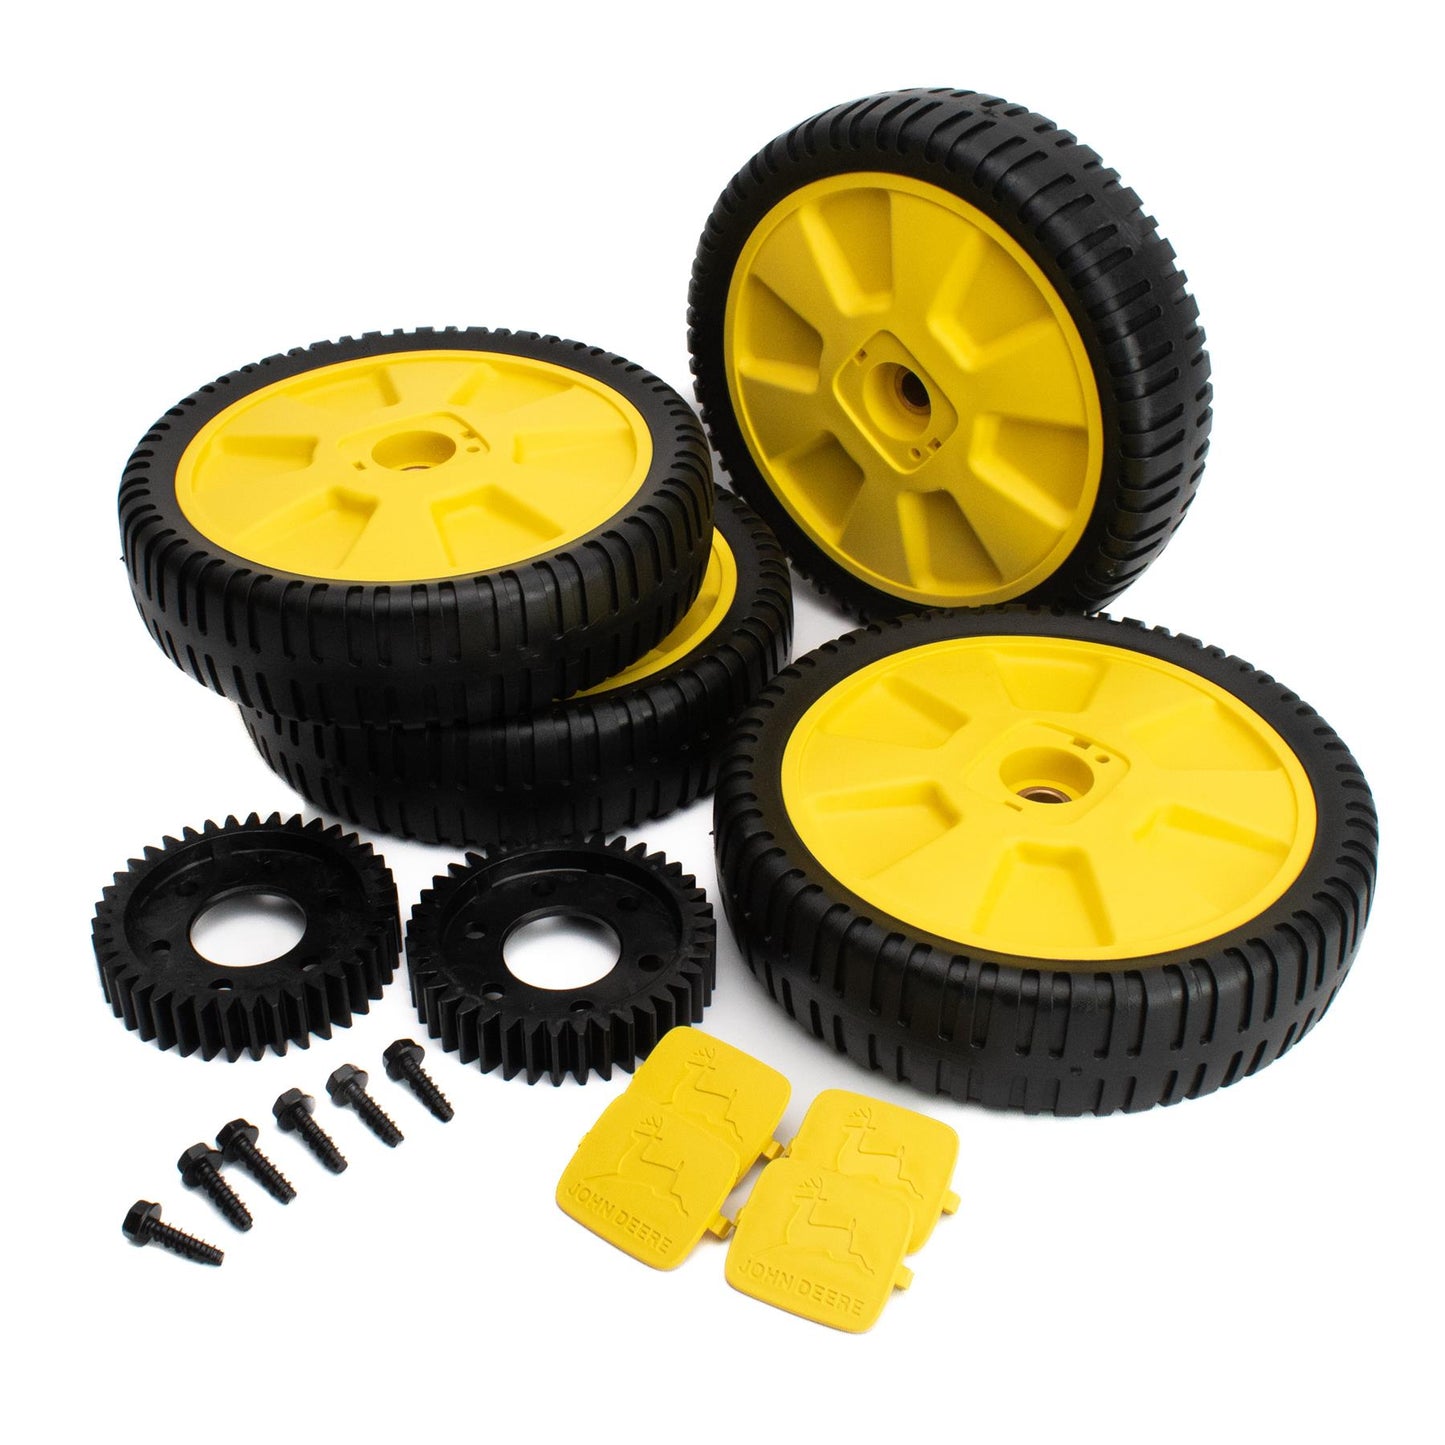 John Deere Wheel Kit - AM115138 M111151